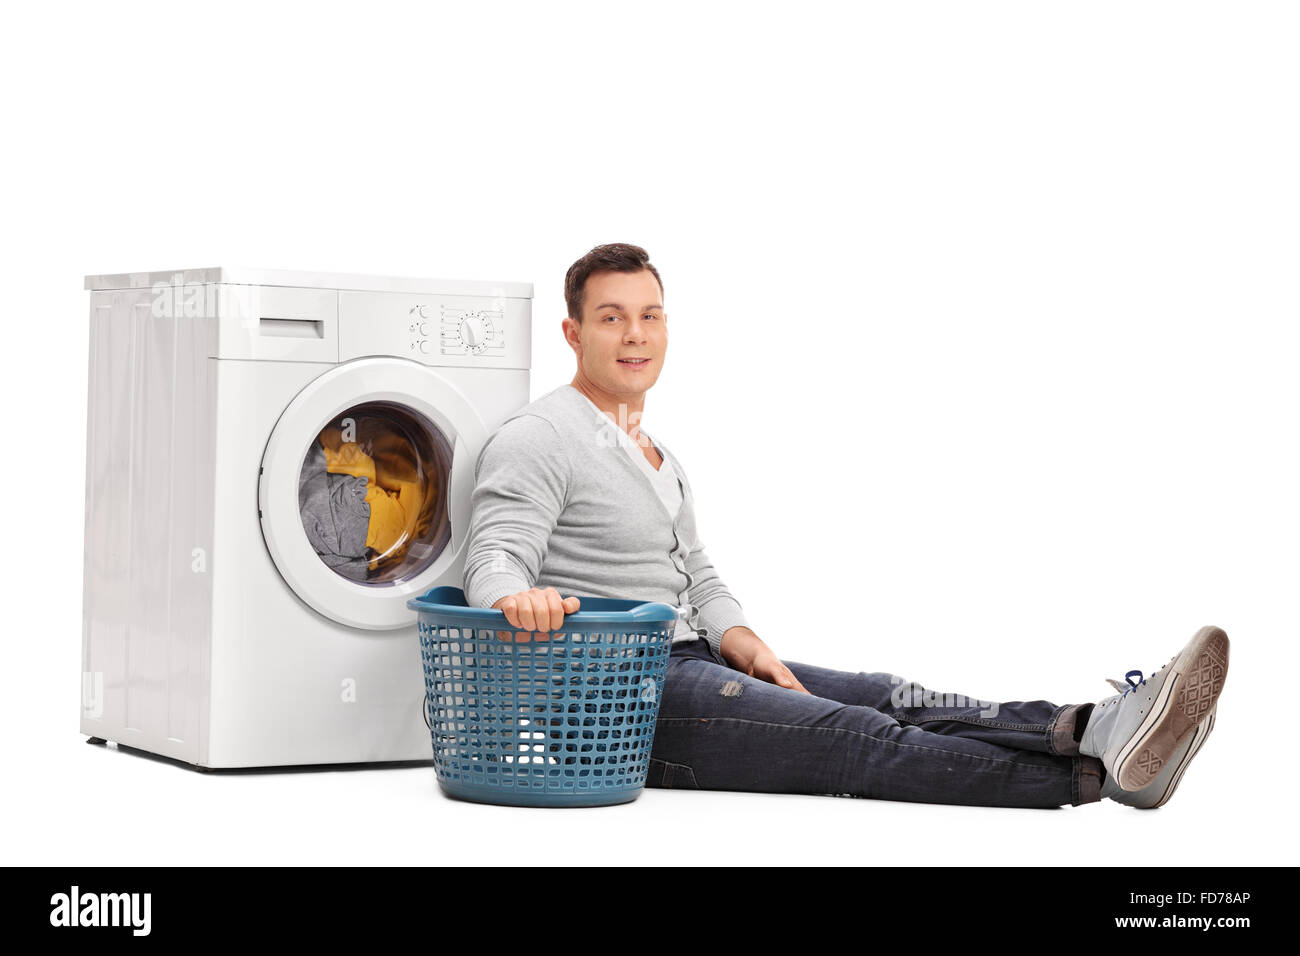 https://c8.alamy.com/comp/FD78AP/studio-shot-of-a-young-man-sitting-by-a-washing-machine-and-doing-FD78AP.jpg